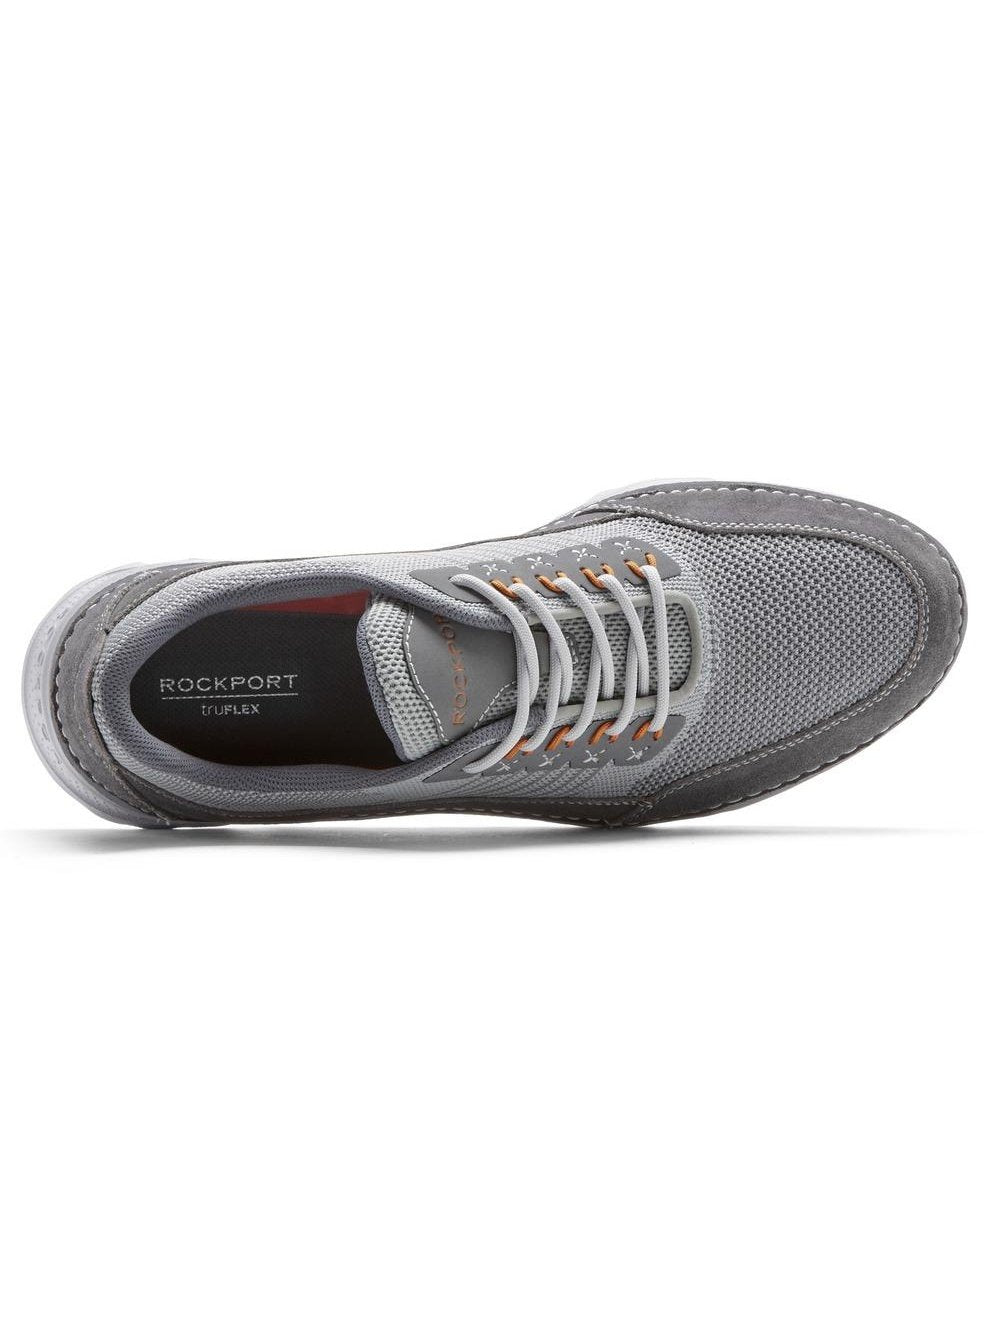 Rockport Men's Rocsports Sneaker Grey Mesh Suede CI3199.